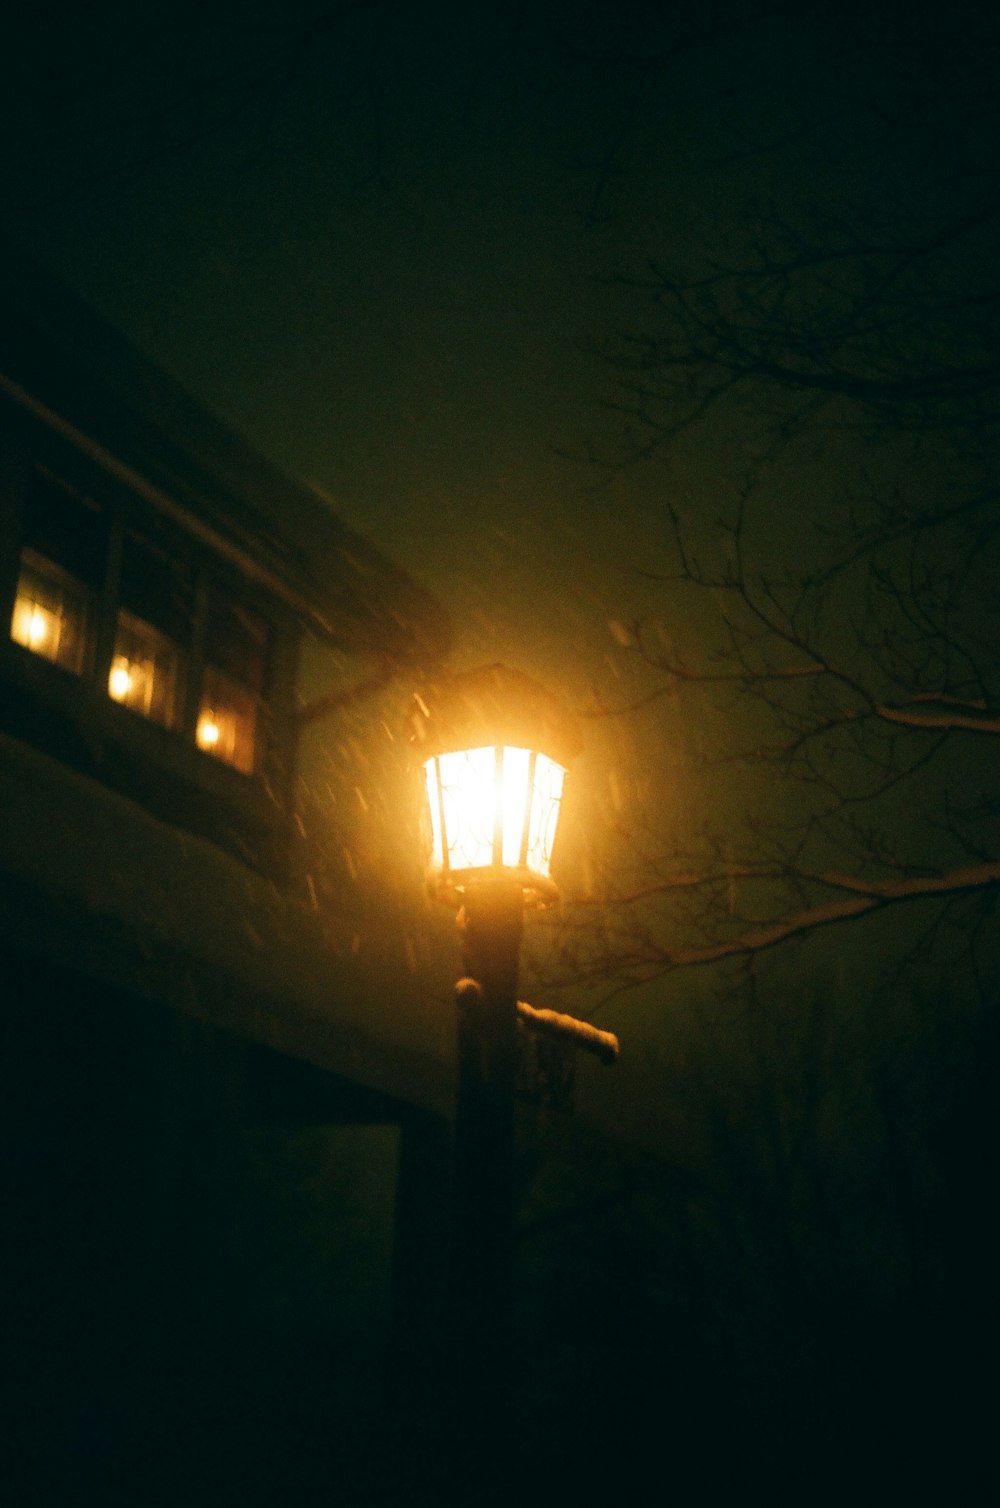 a street light lit up in the dark